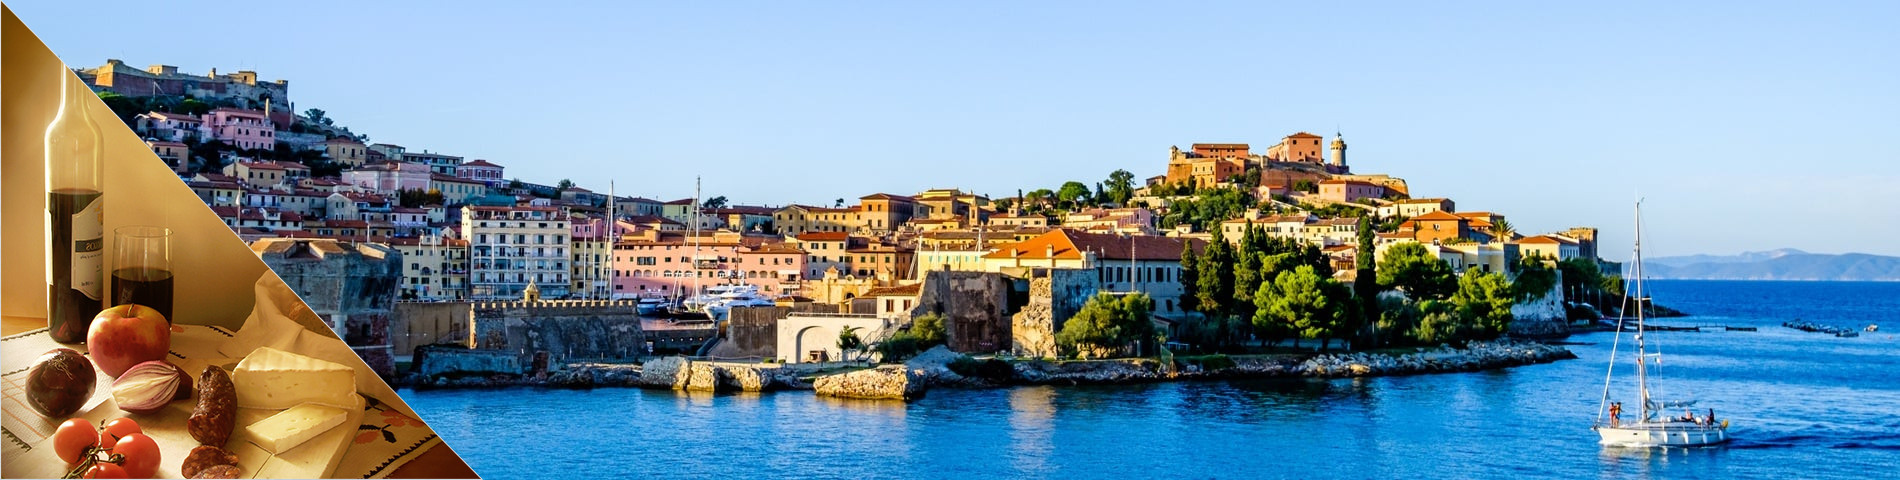 Ostrov Elba - Taliančina a kultúra